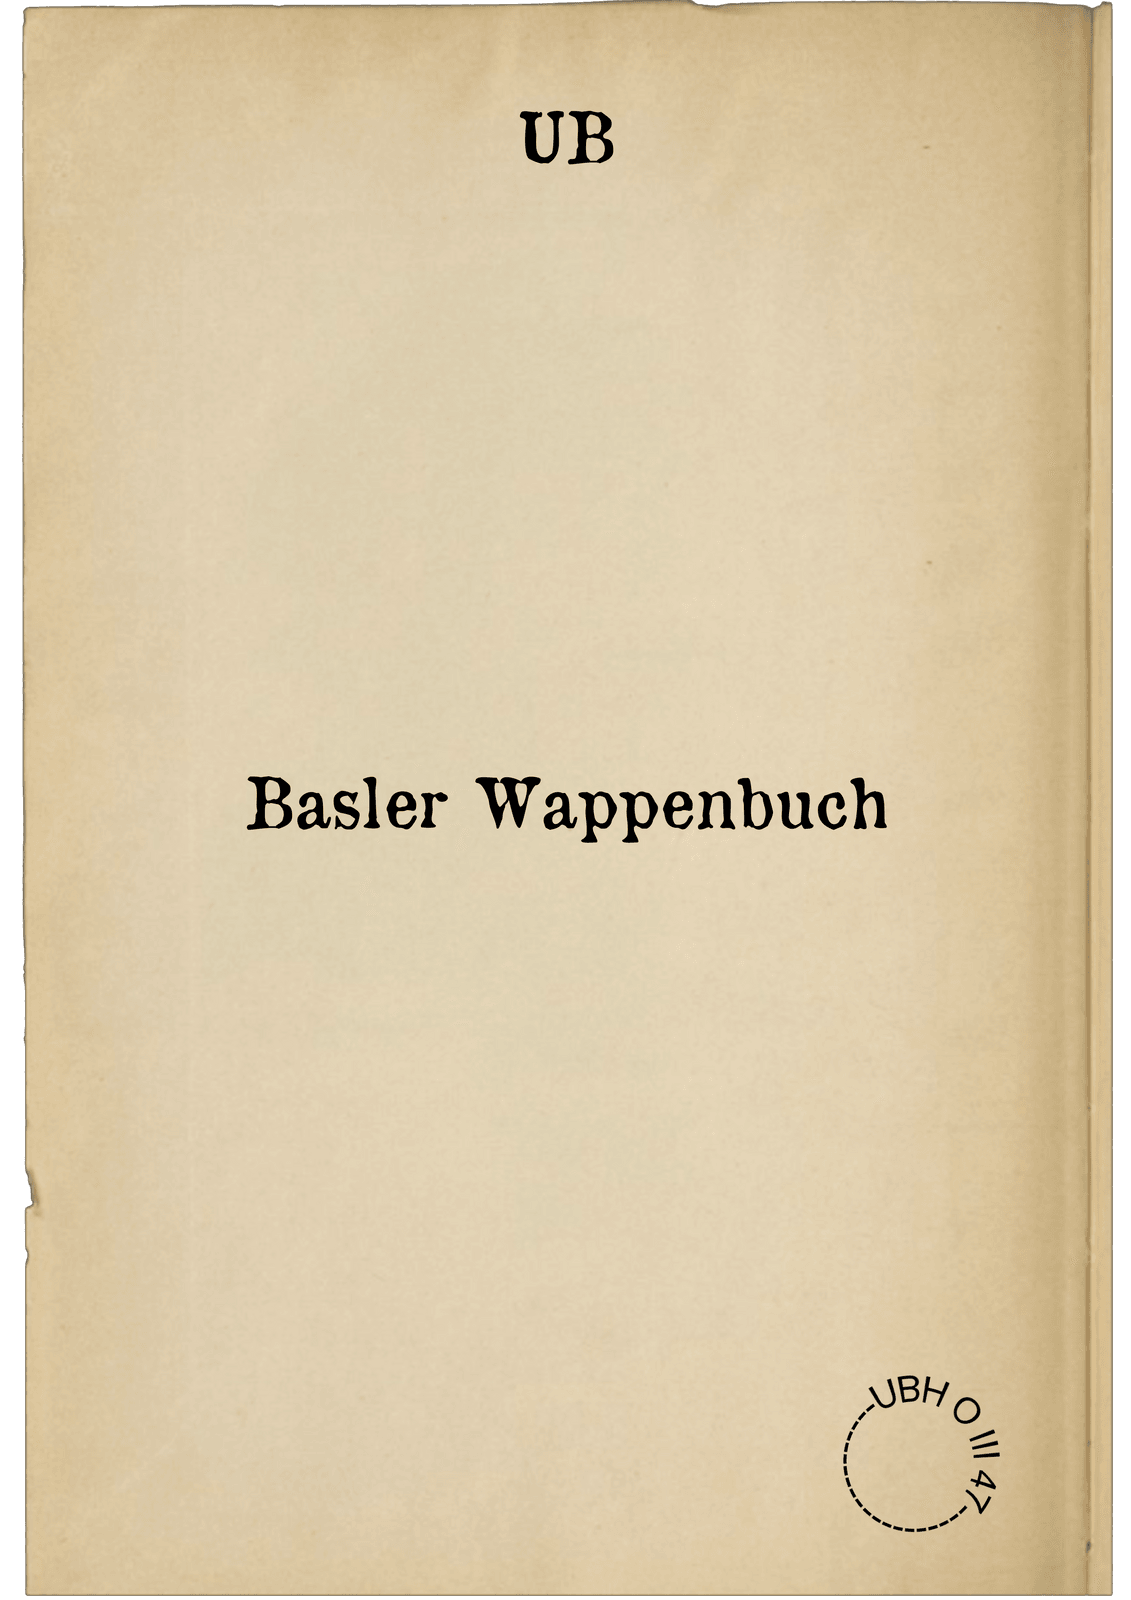 Basler Wappenbuch